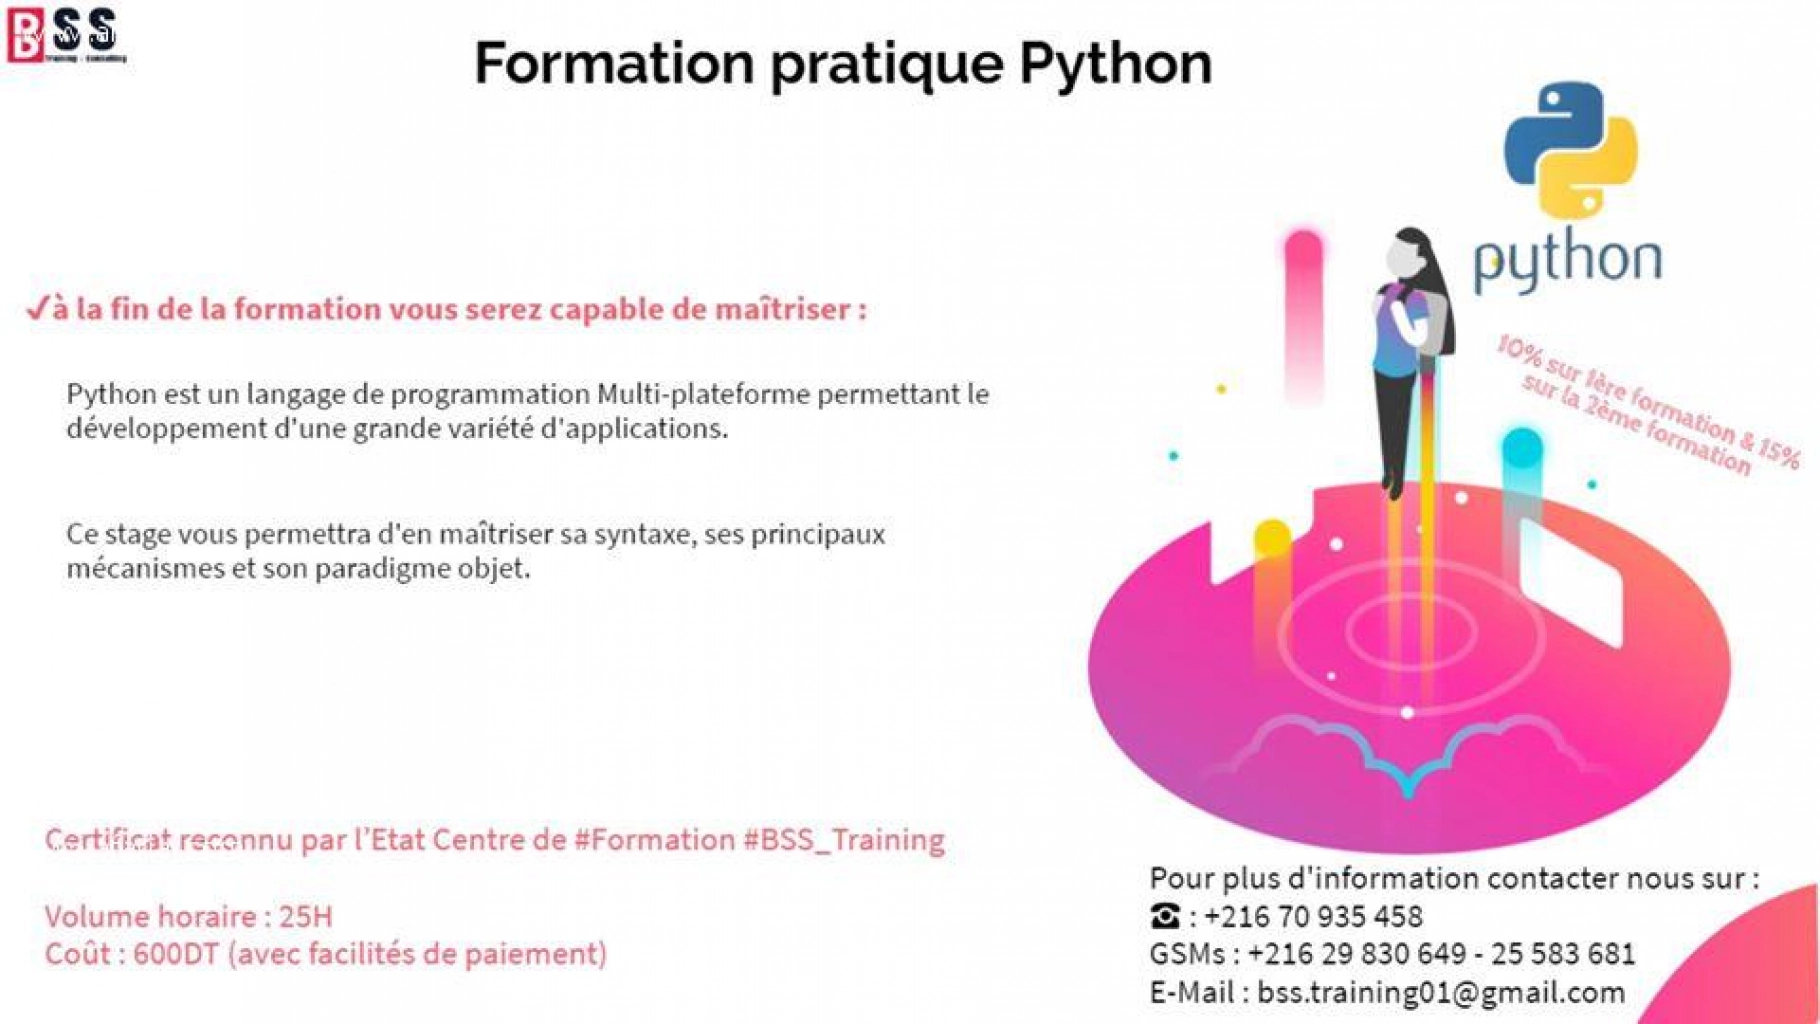 Formation pratique Python